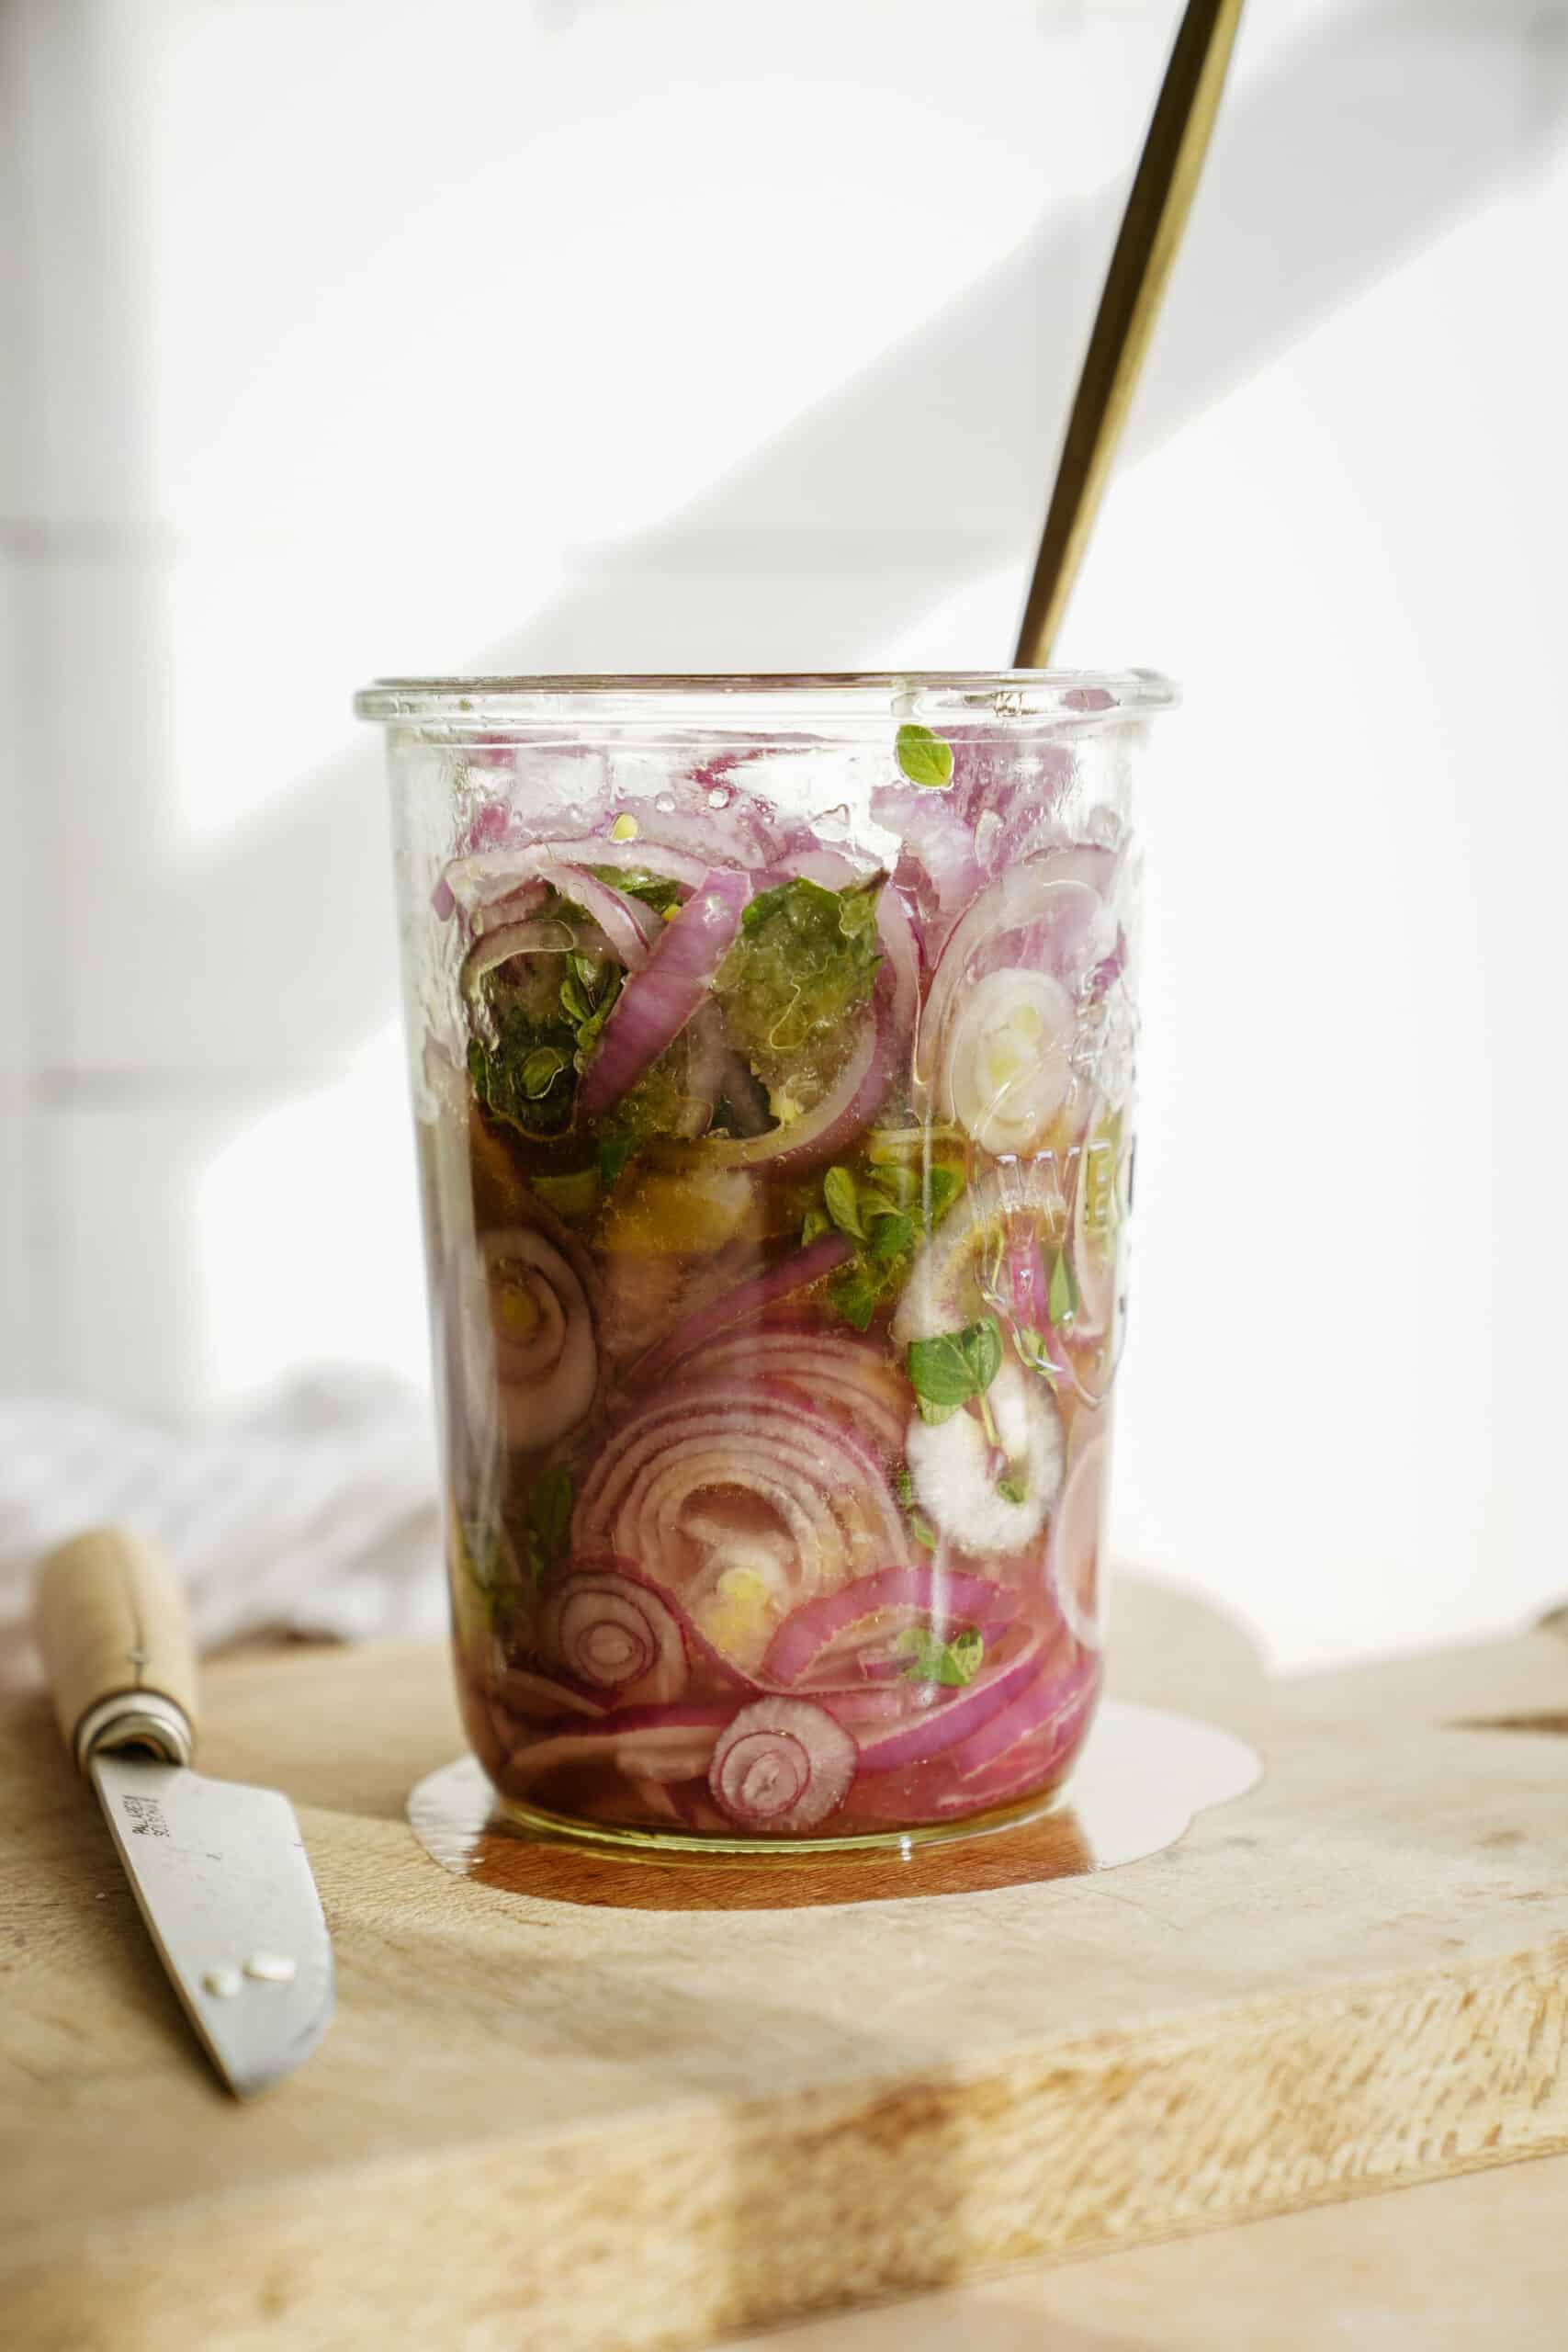 Ingredients in jar for pickling onions